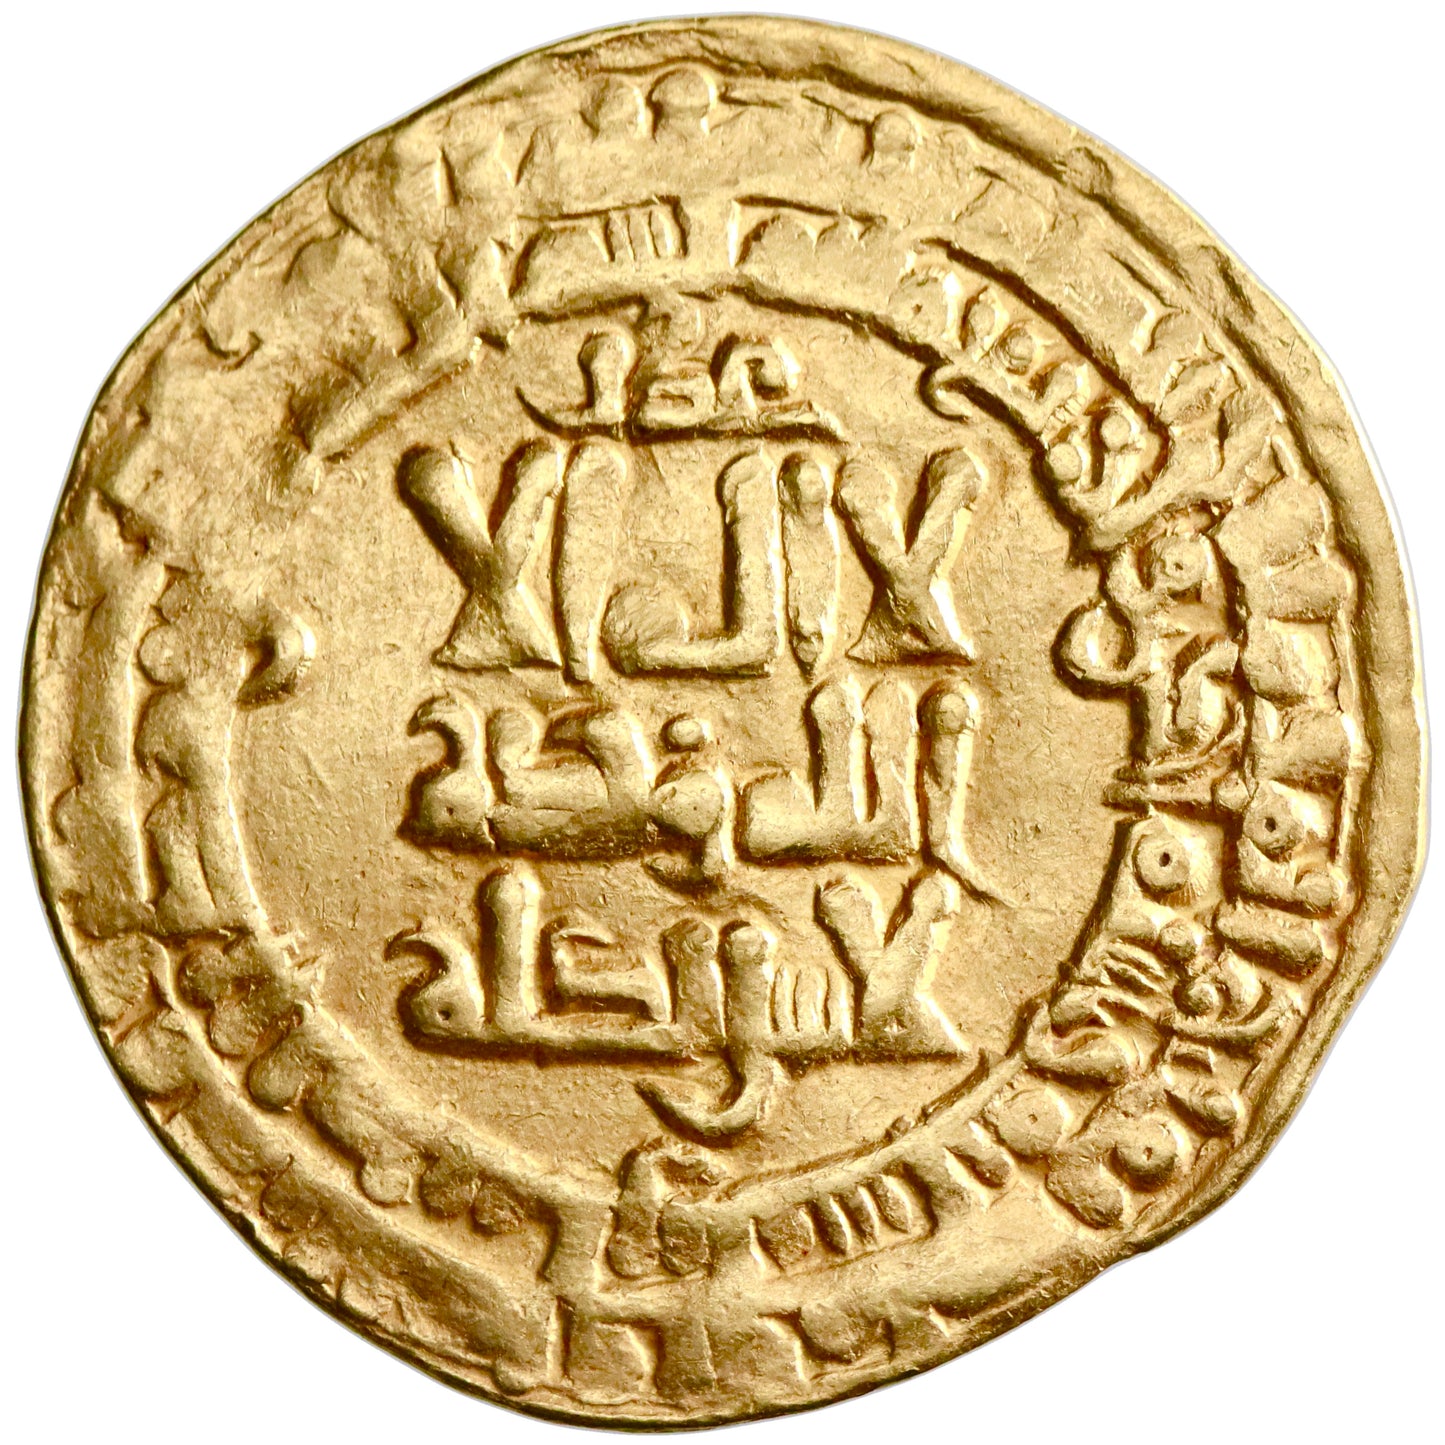 Ghaznavid, Mahmud ibn Sebuktegin, gold dinar, Naysabur (Nishapur) mint, AH 401, citing al-Qadir and al-Ghalib